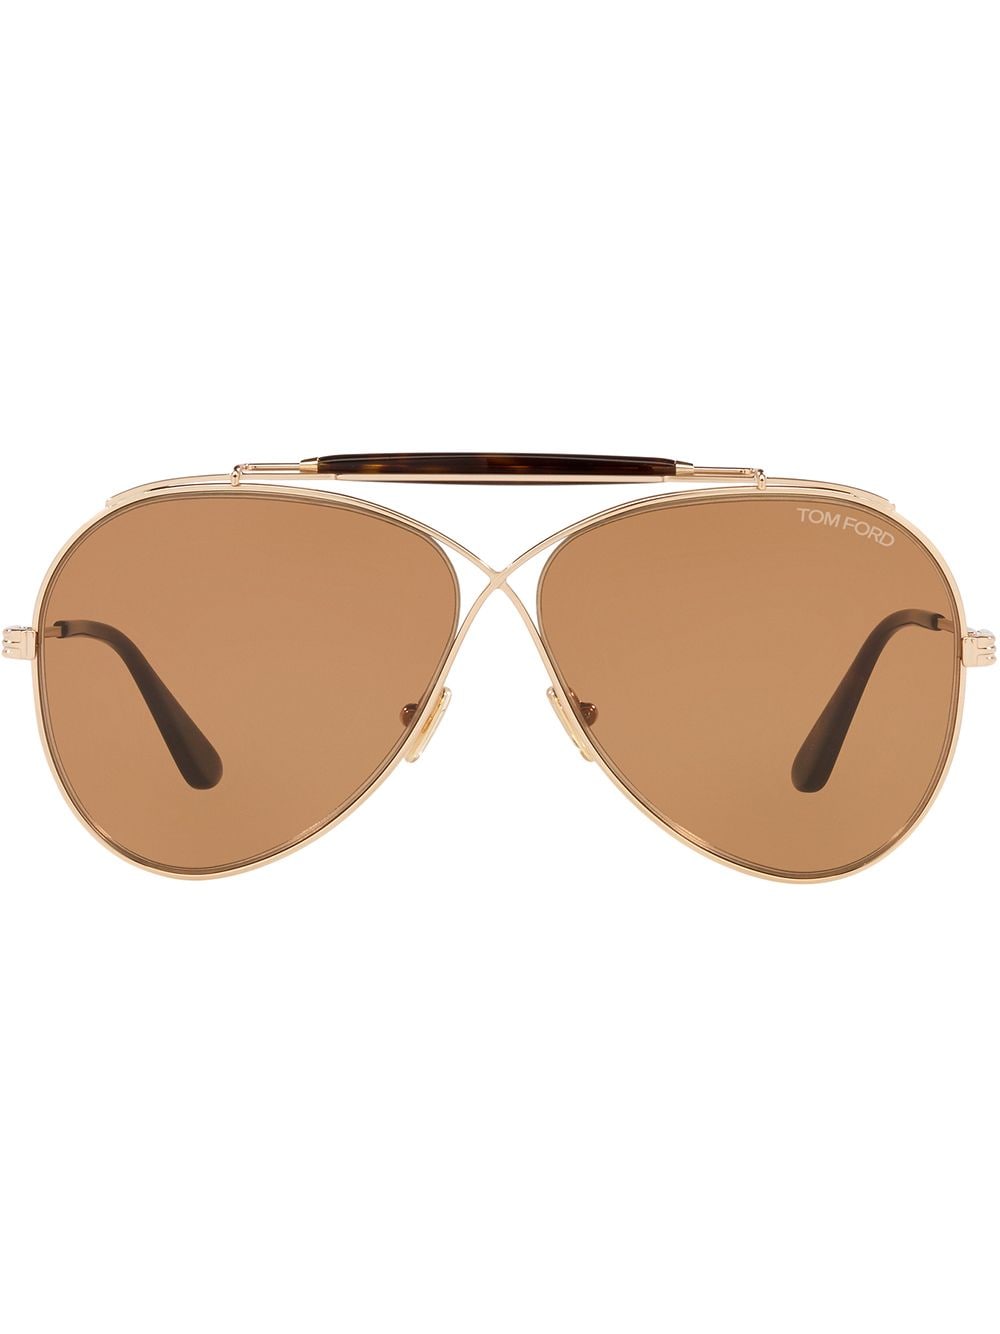 TOM FORD Eyewear pilot tinted sunglasses - Gold von TOM FORD Eyewear